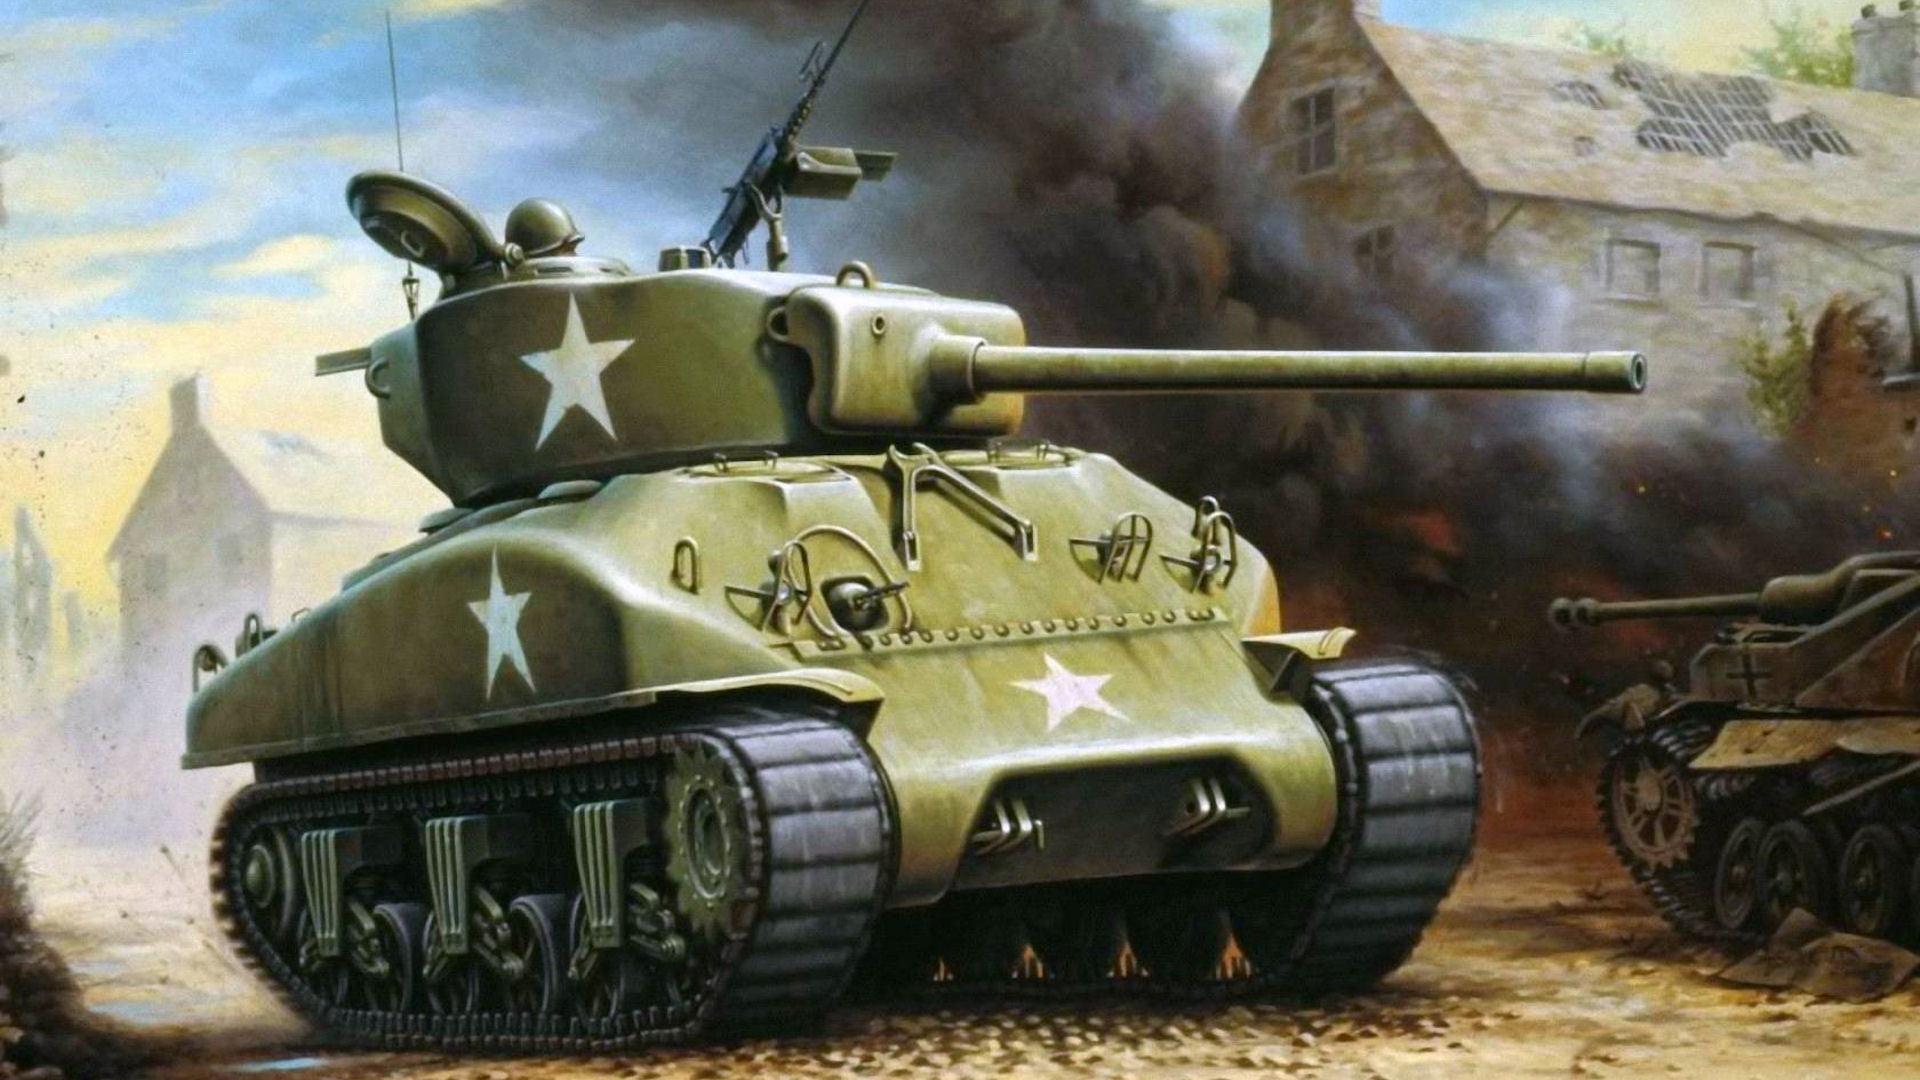 green tank illustration, war, smoke, figure, art, devastation